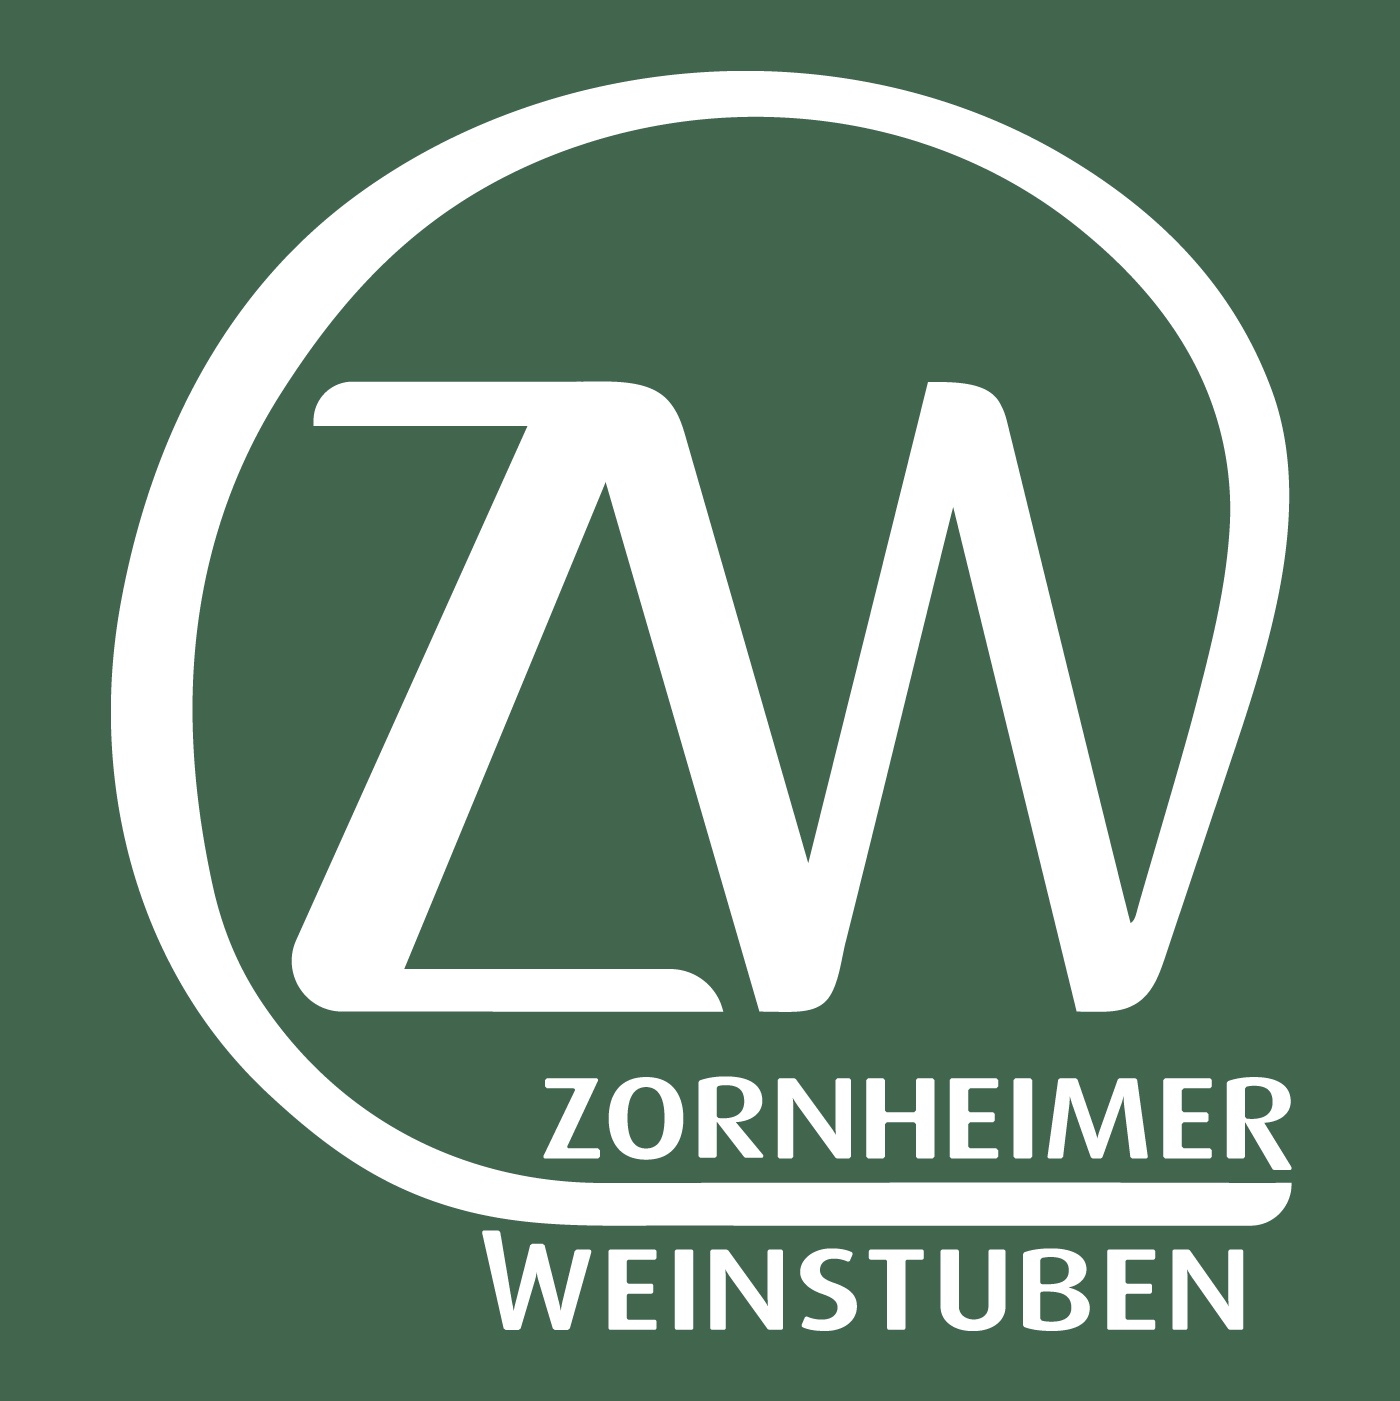 Zornheimer Weinstuben